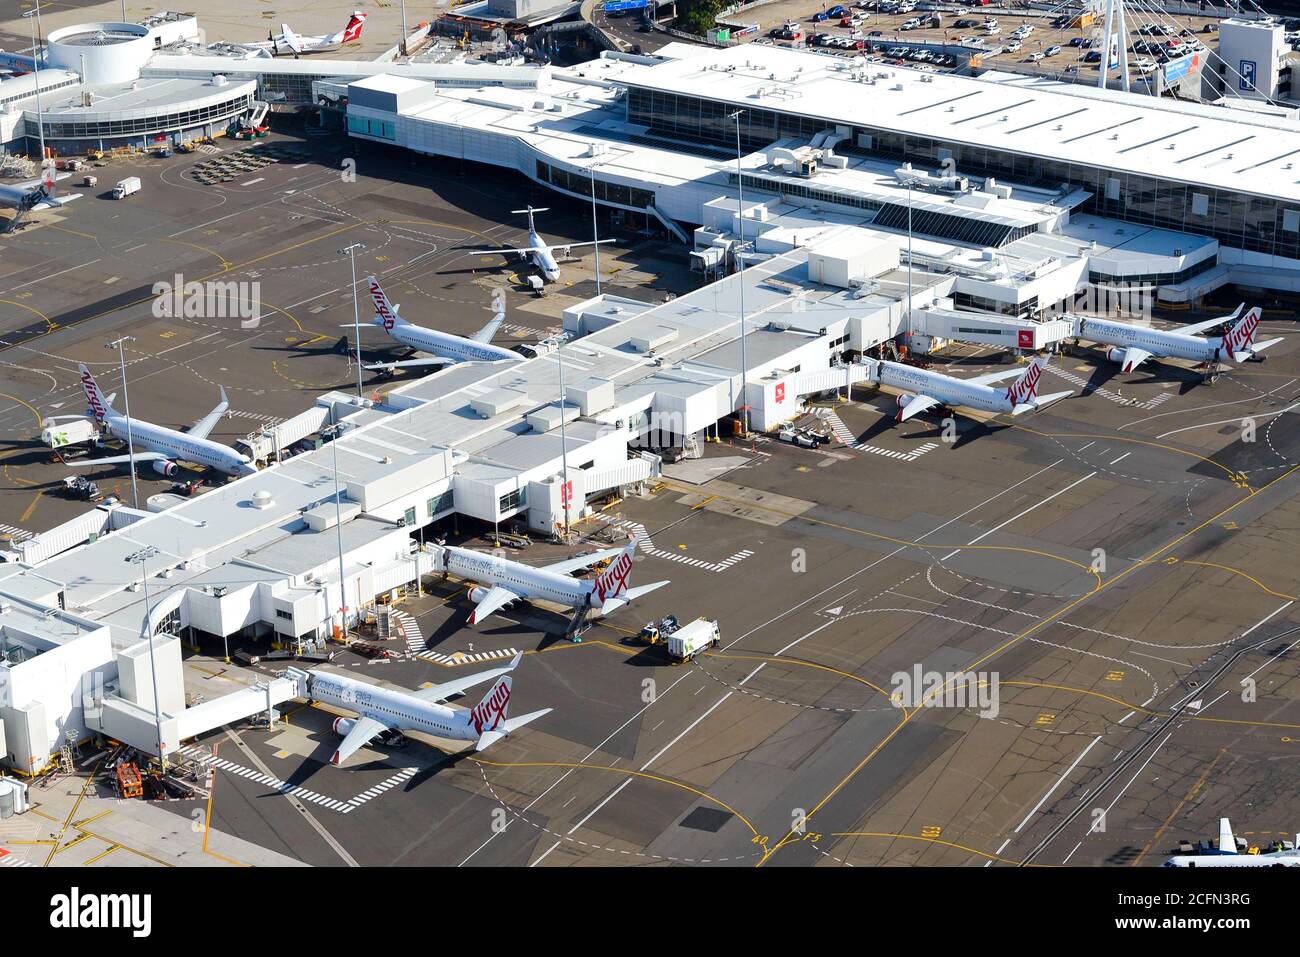 Virgin Australia domestic Terminal 2 at Sydney Airport, Australia. Passengers terminal with multiple 737 aircraft. Domestic air travel in Australia. Stock Photo